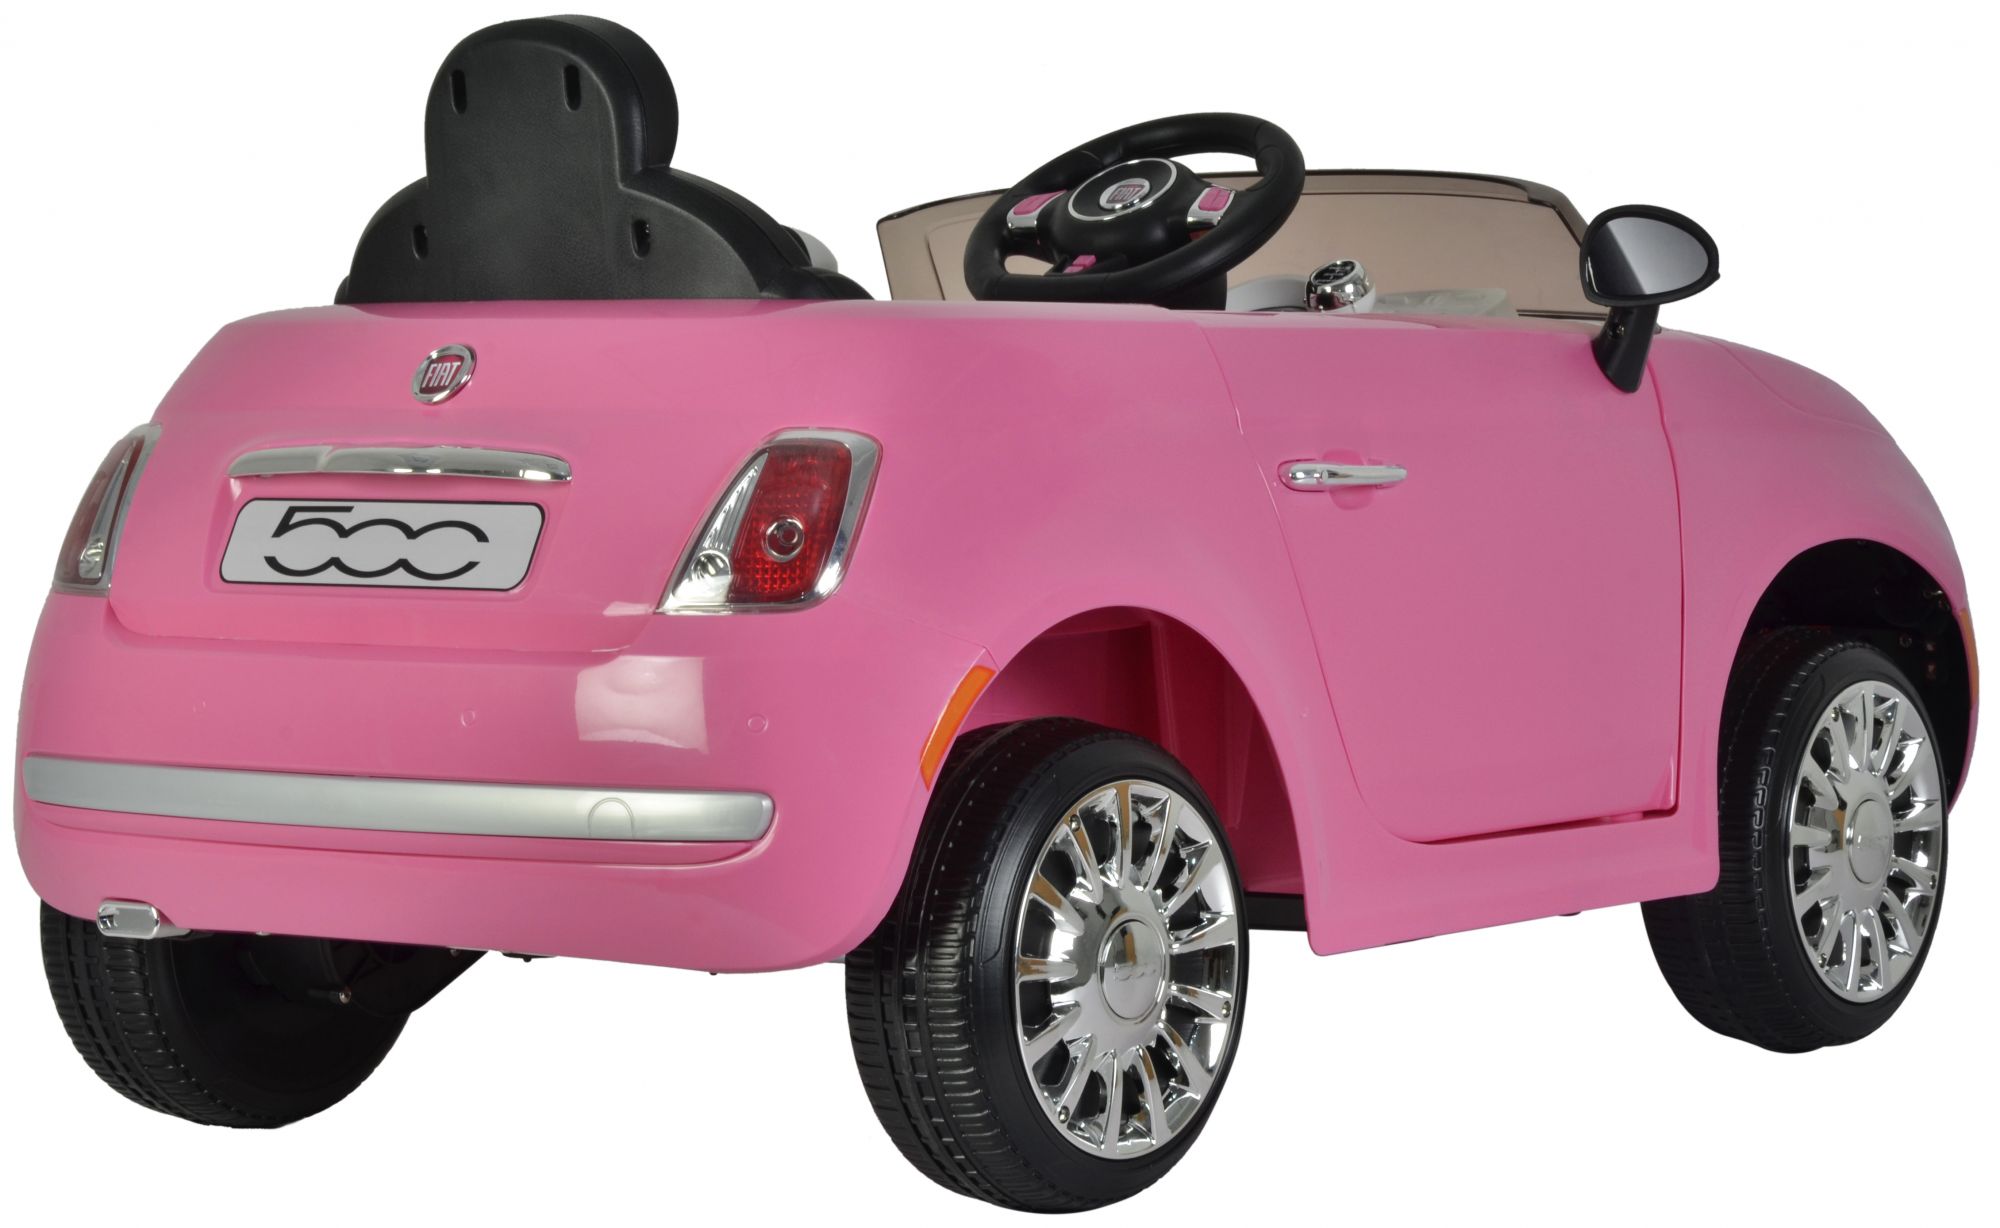 pink fiat 500 toy car